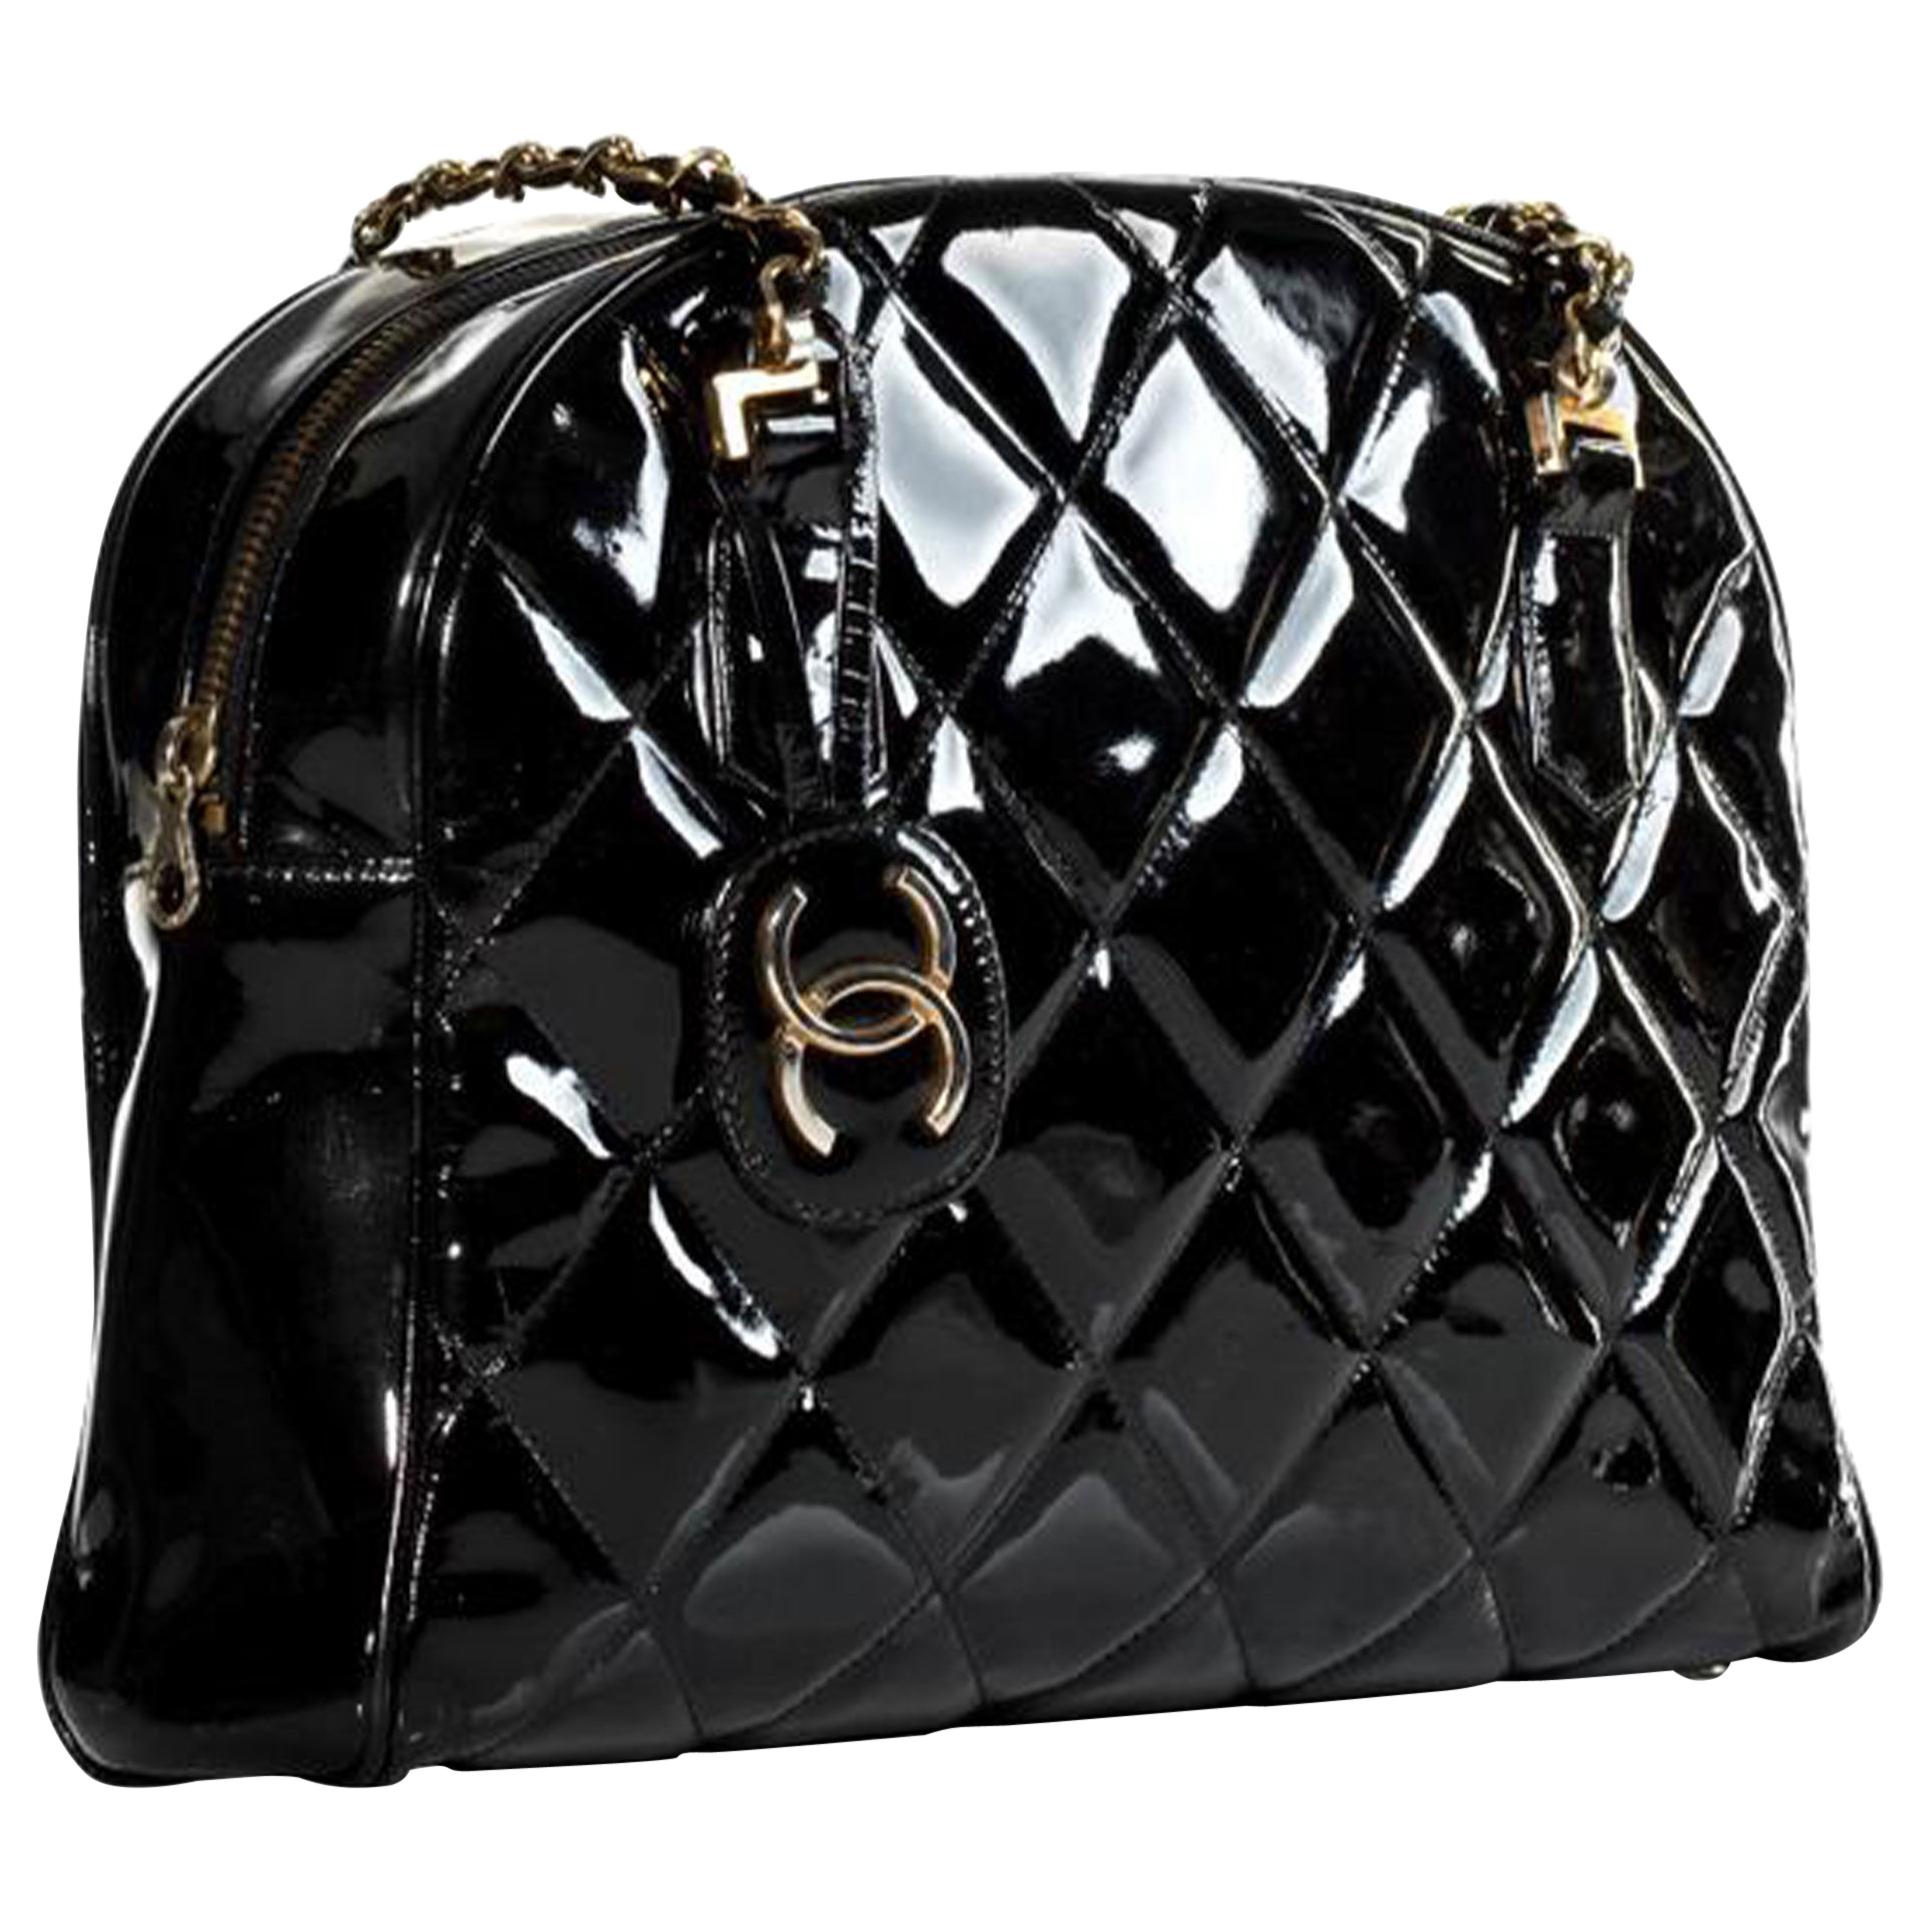 black patent leather chanel handbag vintage